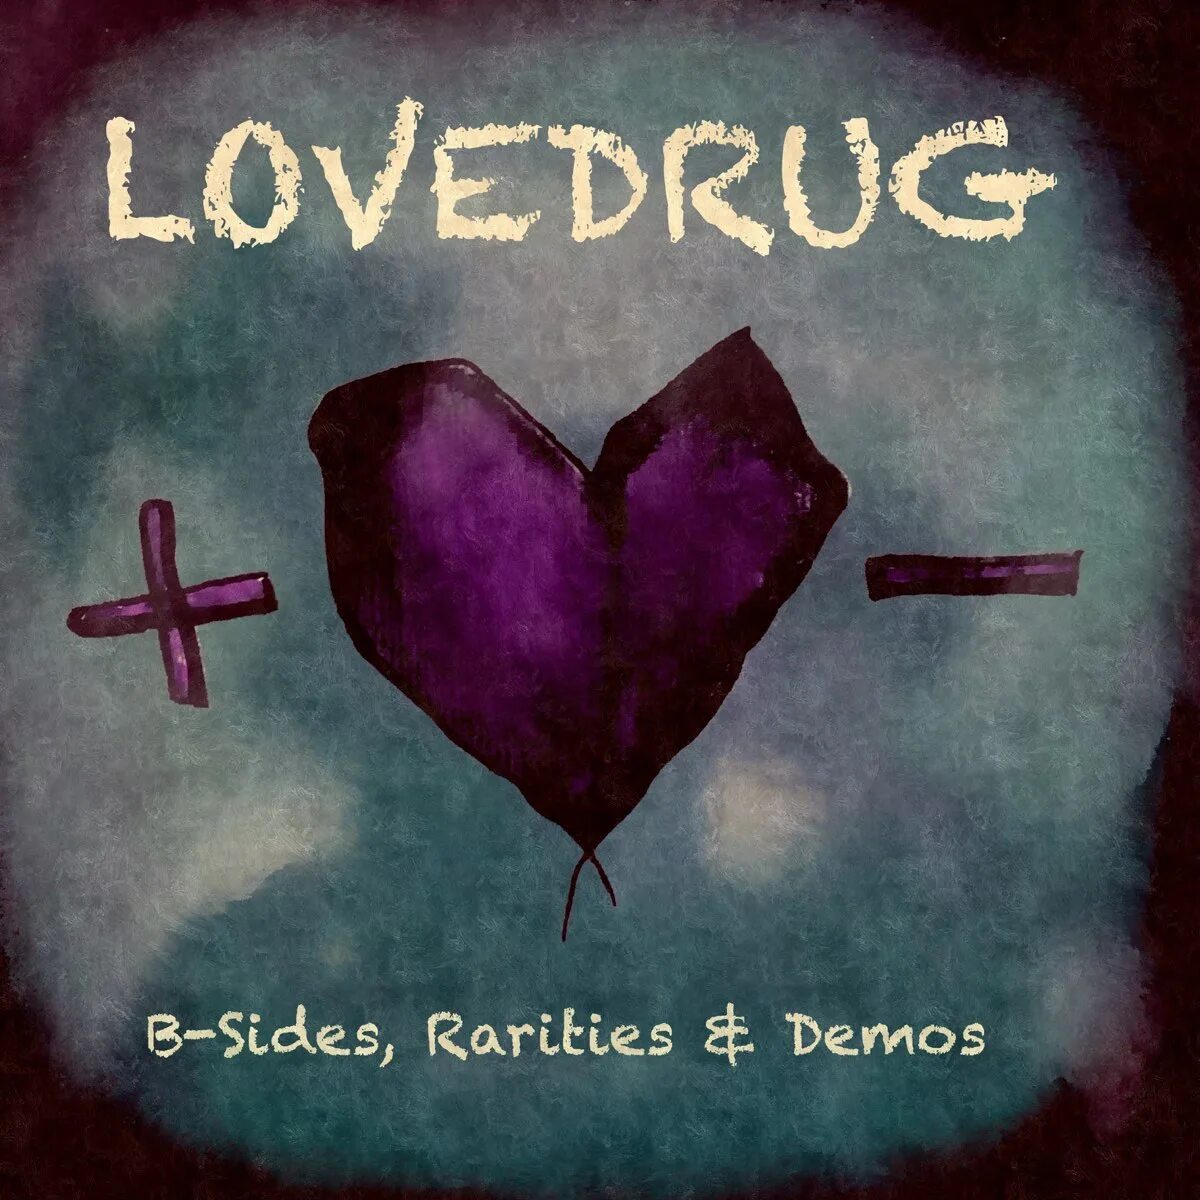 Lovedrug. B Side. The Love drug картинка. Notions Lovedrug.